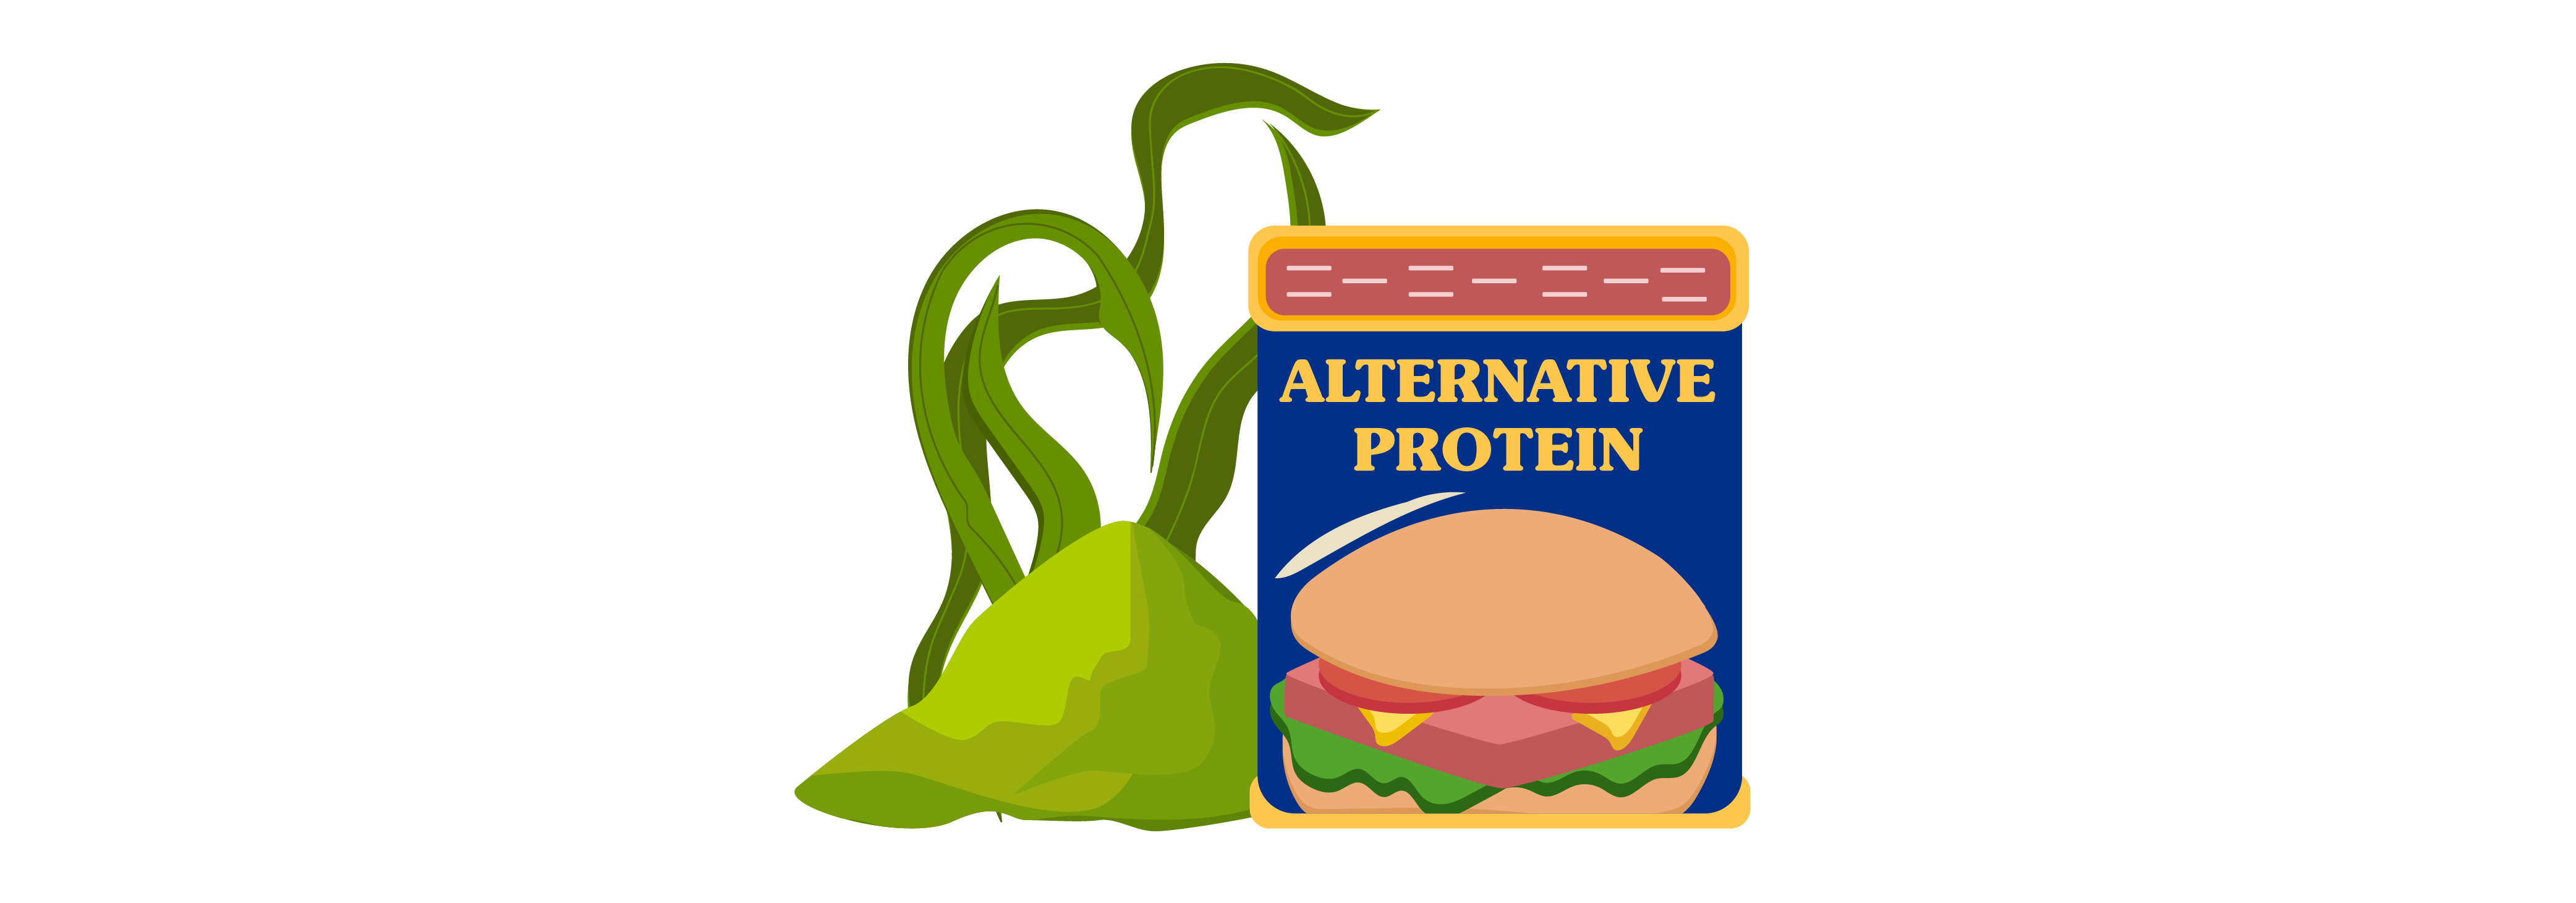 Food Innovation - Alternative Protein